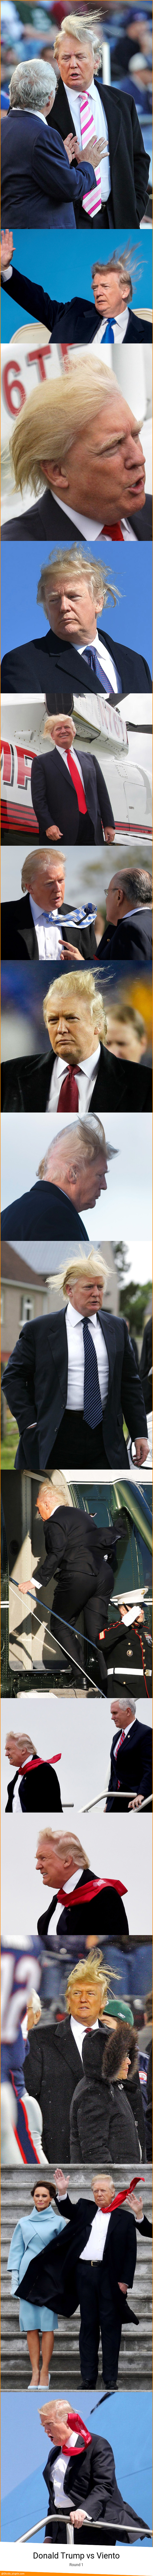 Donald Trump vs Viento